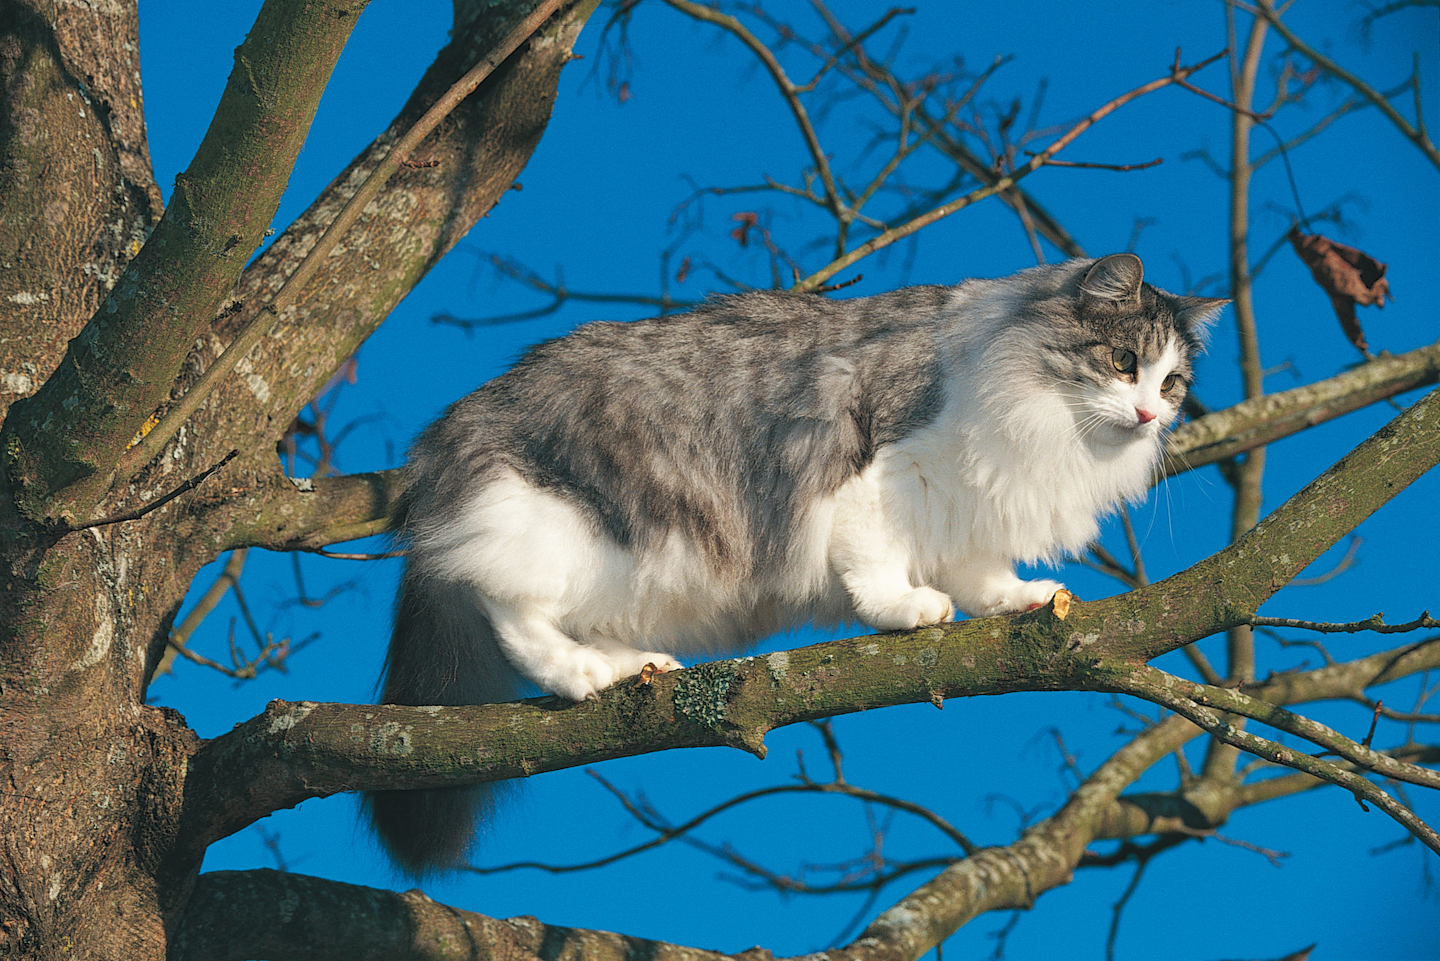 Skogkatt - Норвежская Лесная кошка.